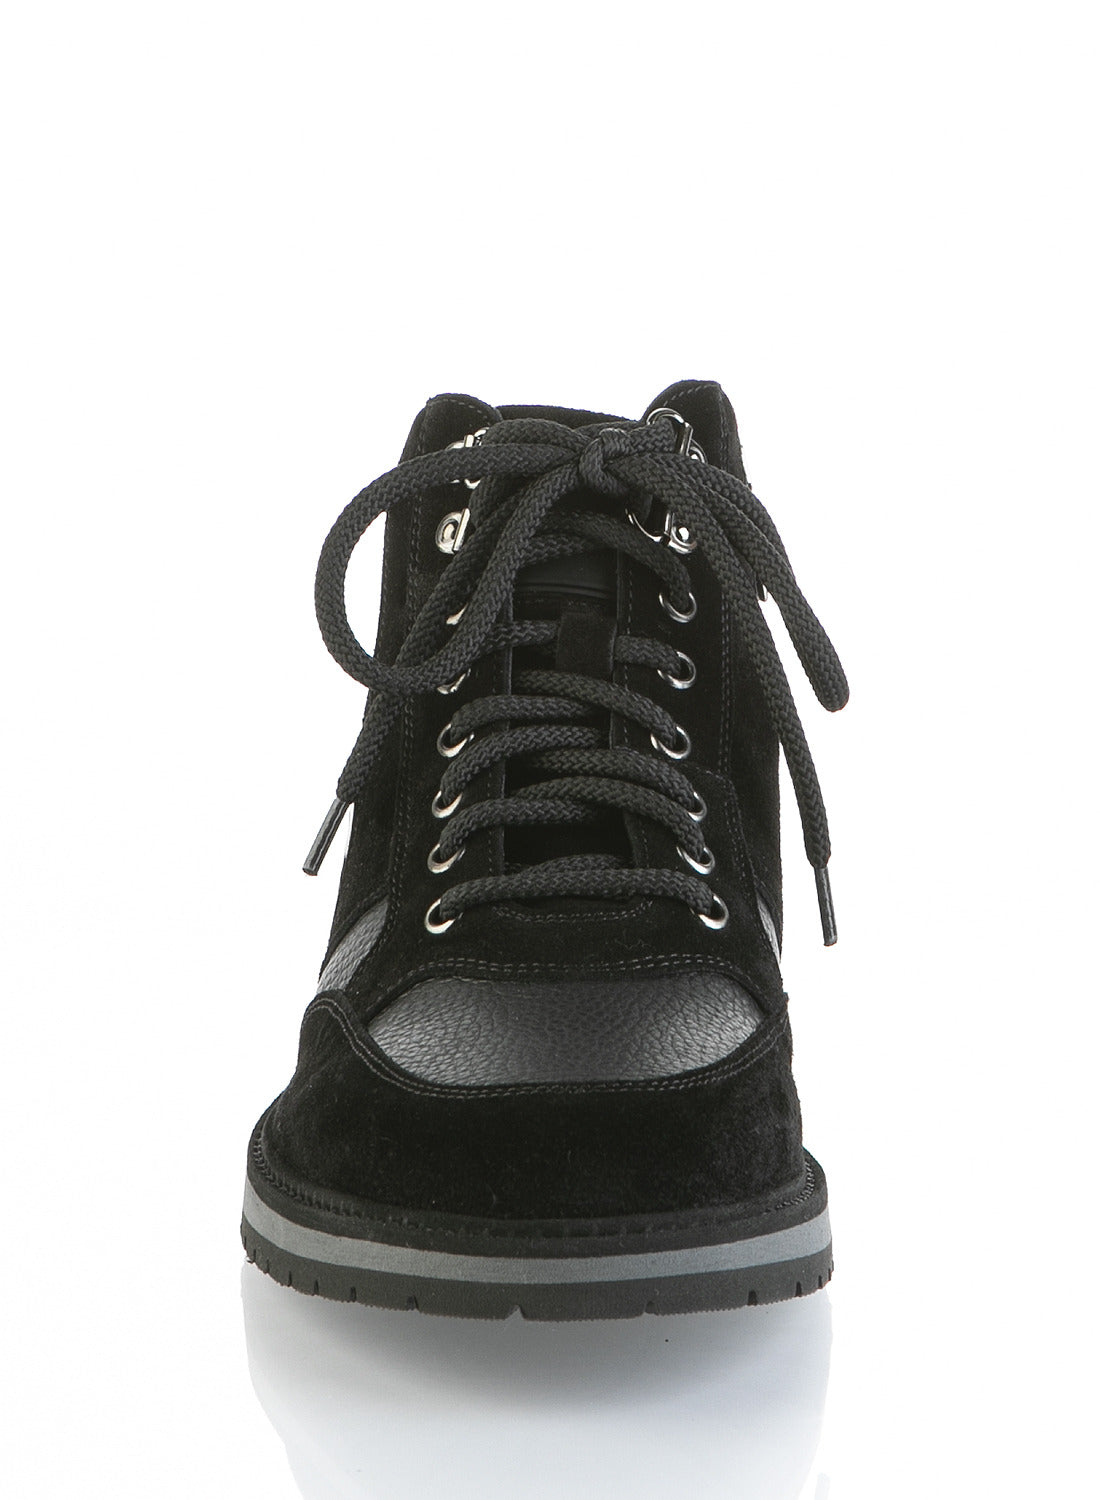 Baldinini Fashion Sneaker Made In Italy Size US8/ EU 40 and US8.5 / EU 41 |  eBay